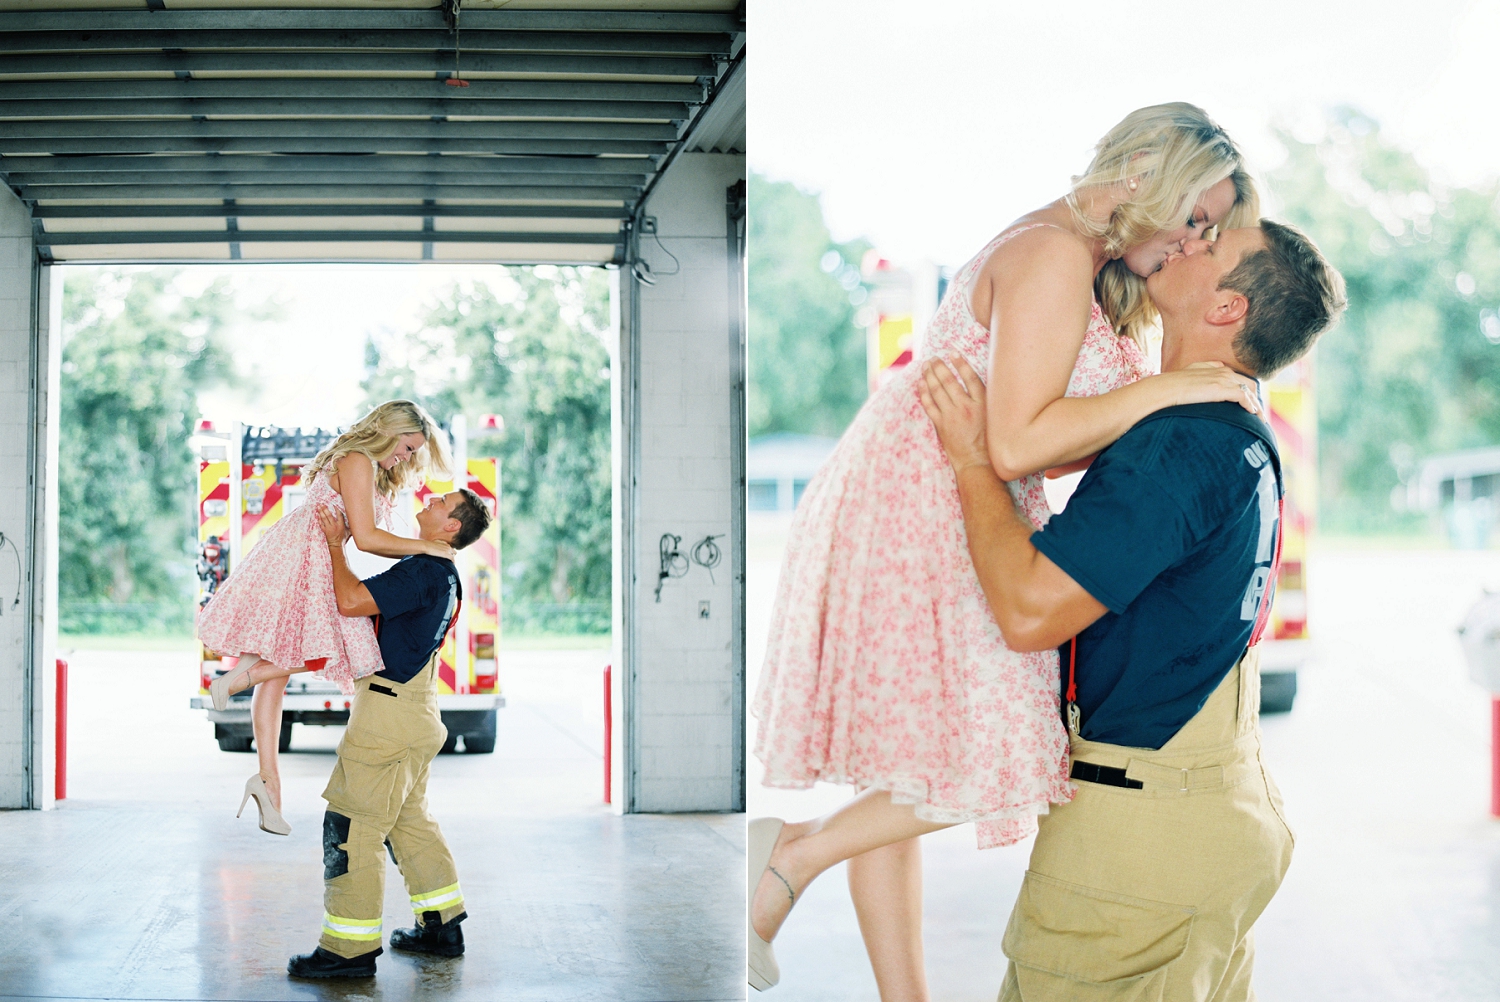 firefighter engagement picture ideas - firefighter engagement - okeechobee wedding photographer